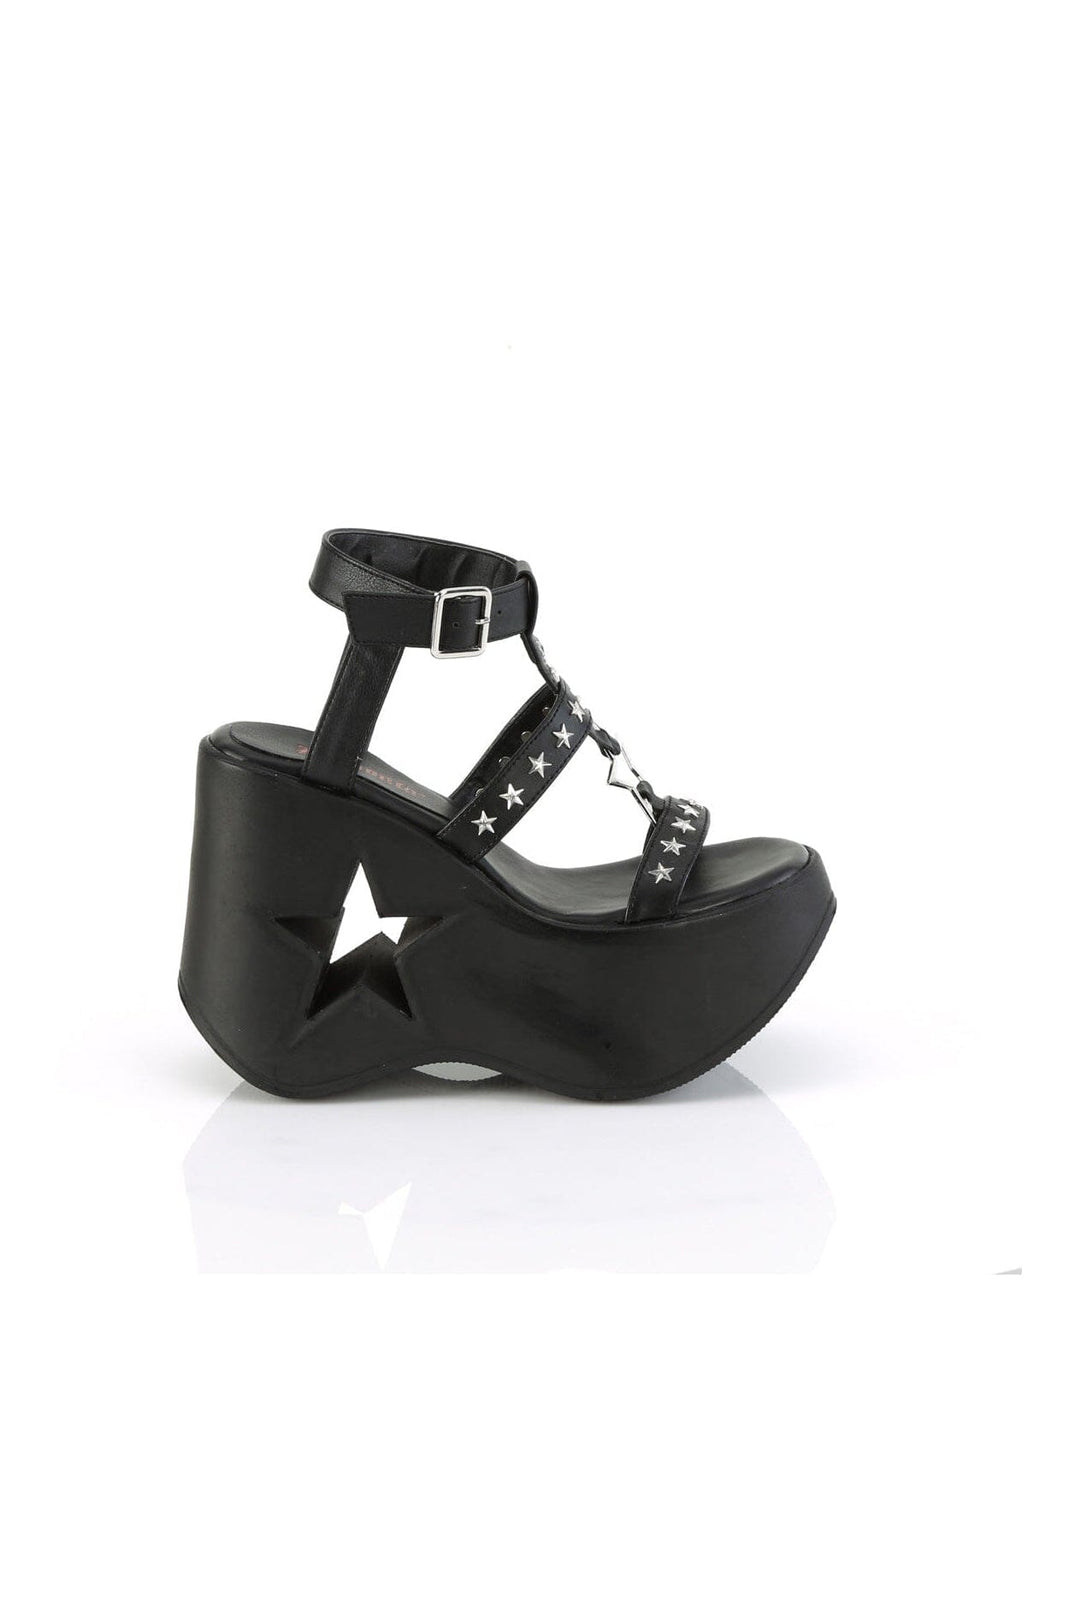 DYNAMITE-12 Black Vegan Leather Sandal-Sandals-Demonia-SEXYSHOES.COM